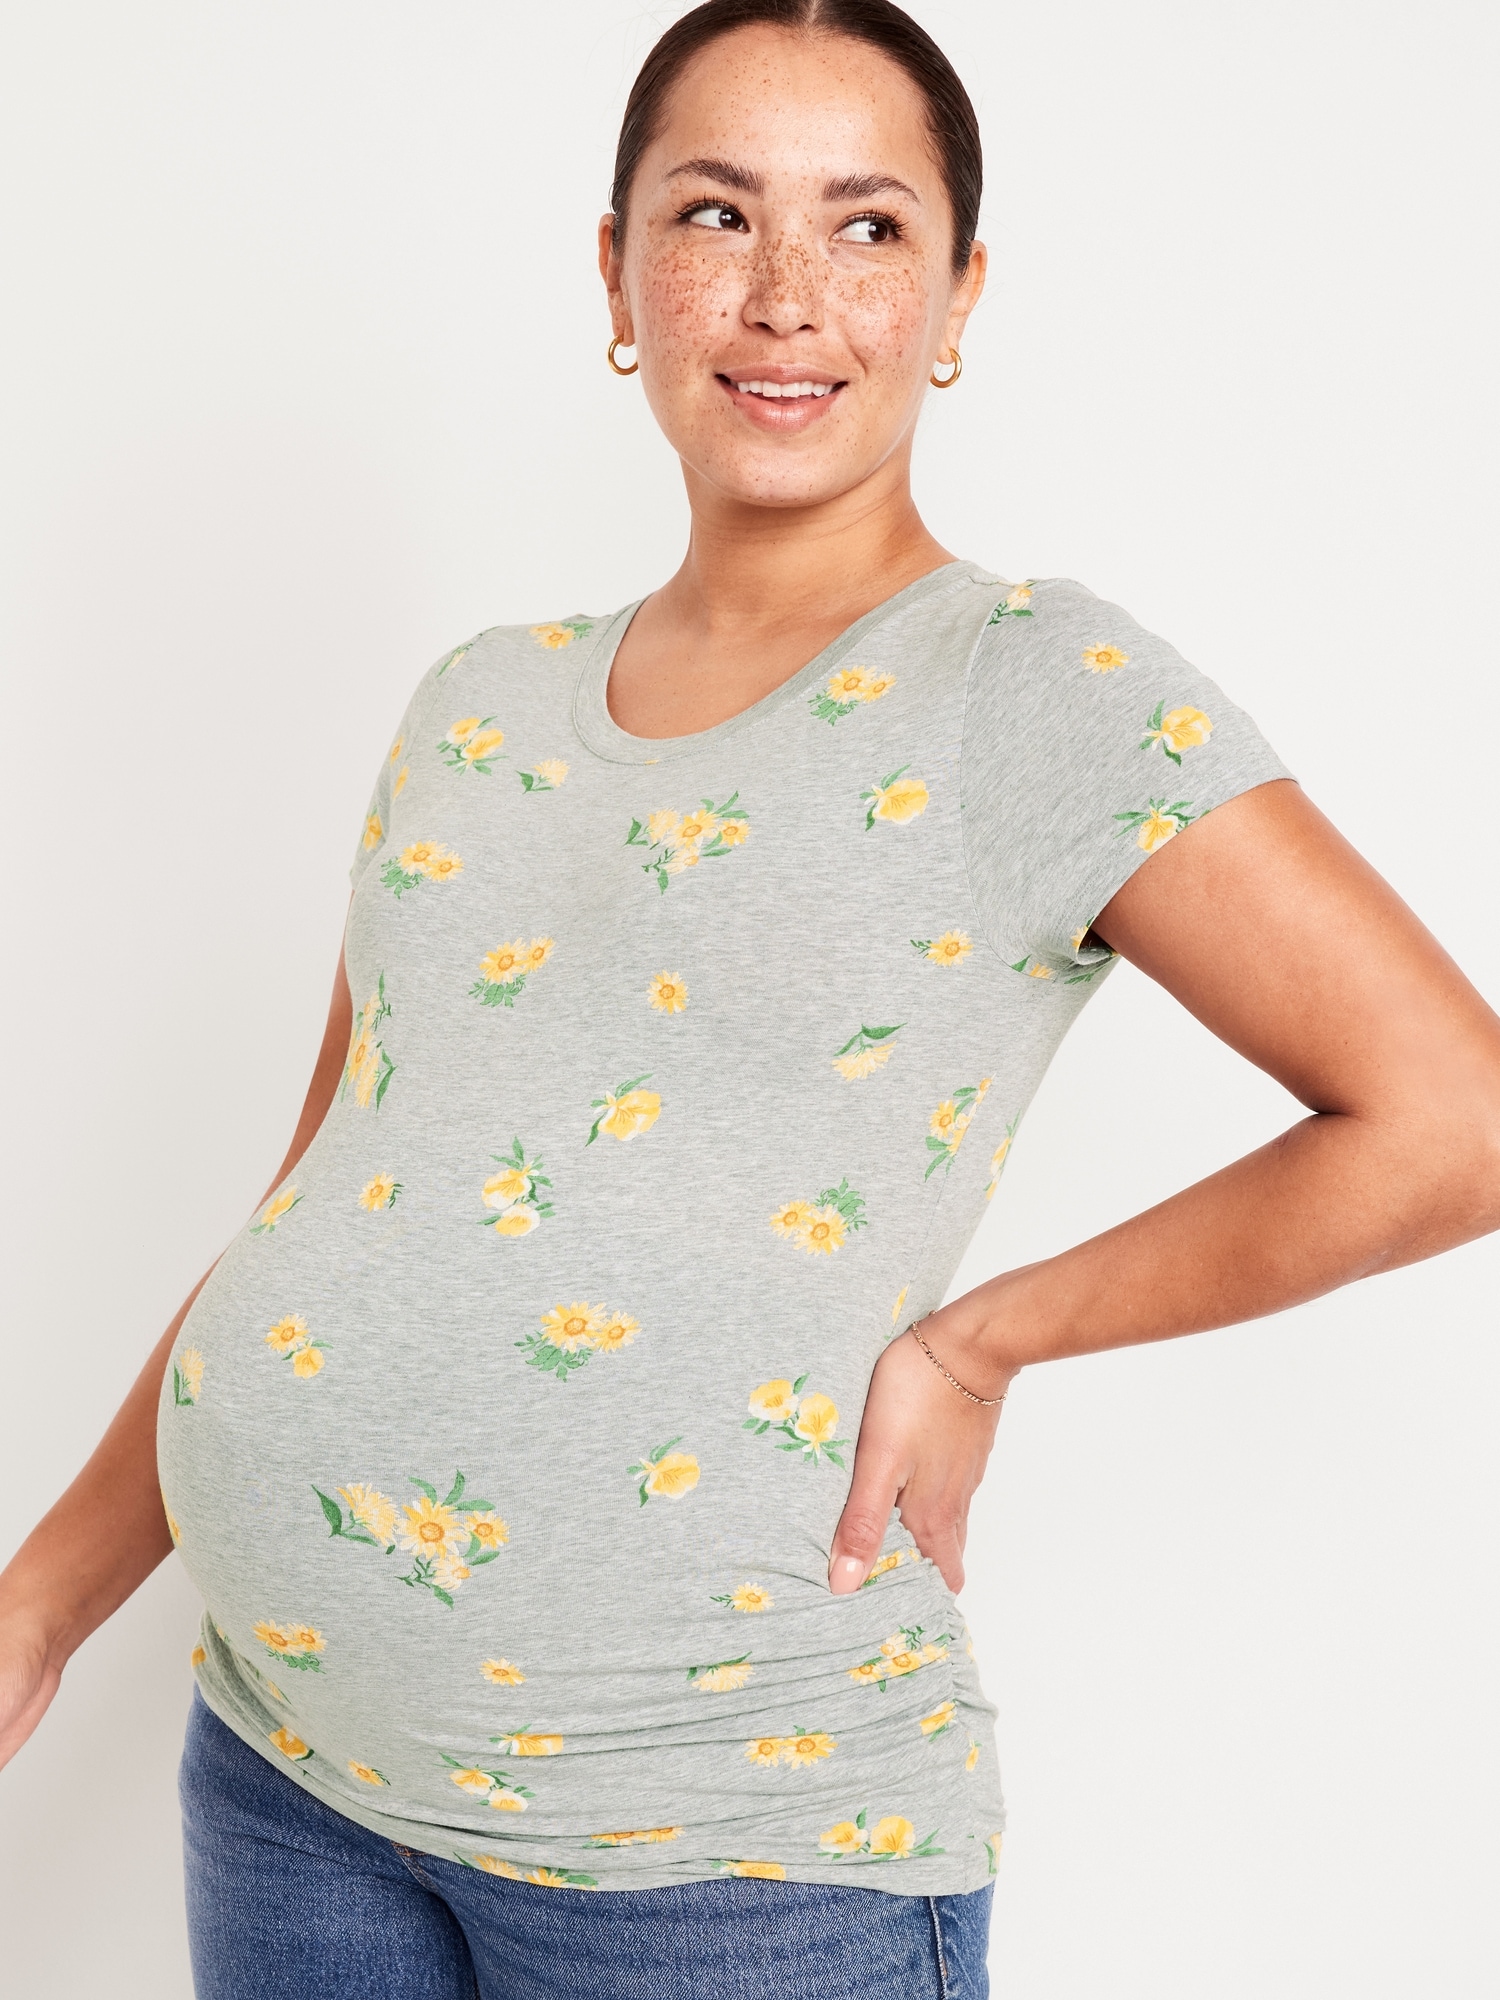 Pregnant AF Maternity Shirt - Pick Color - NobullWoman Apparel